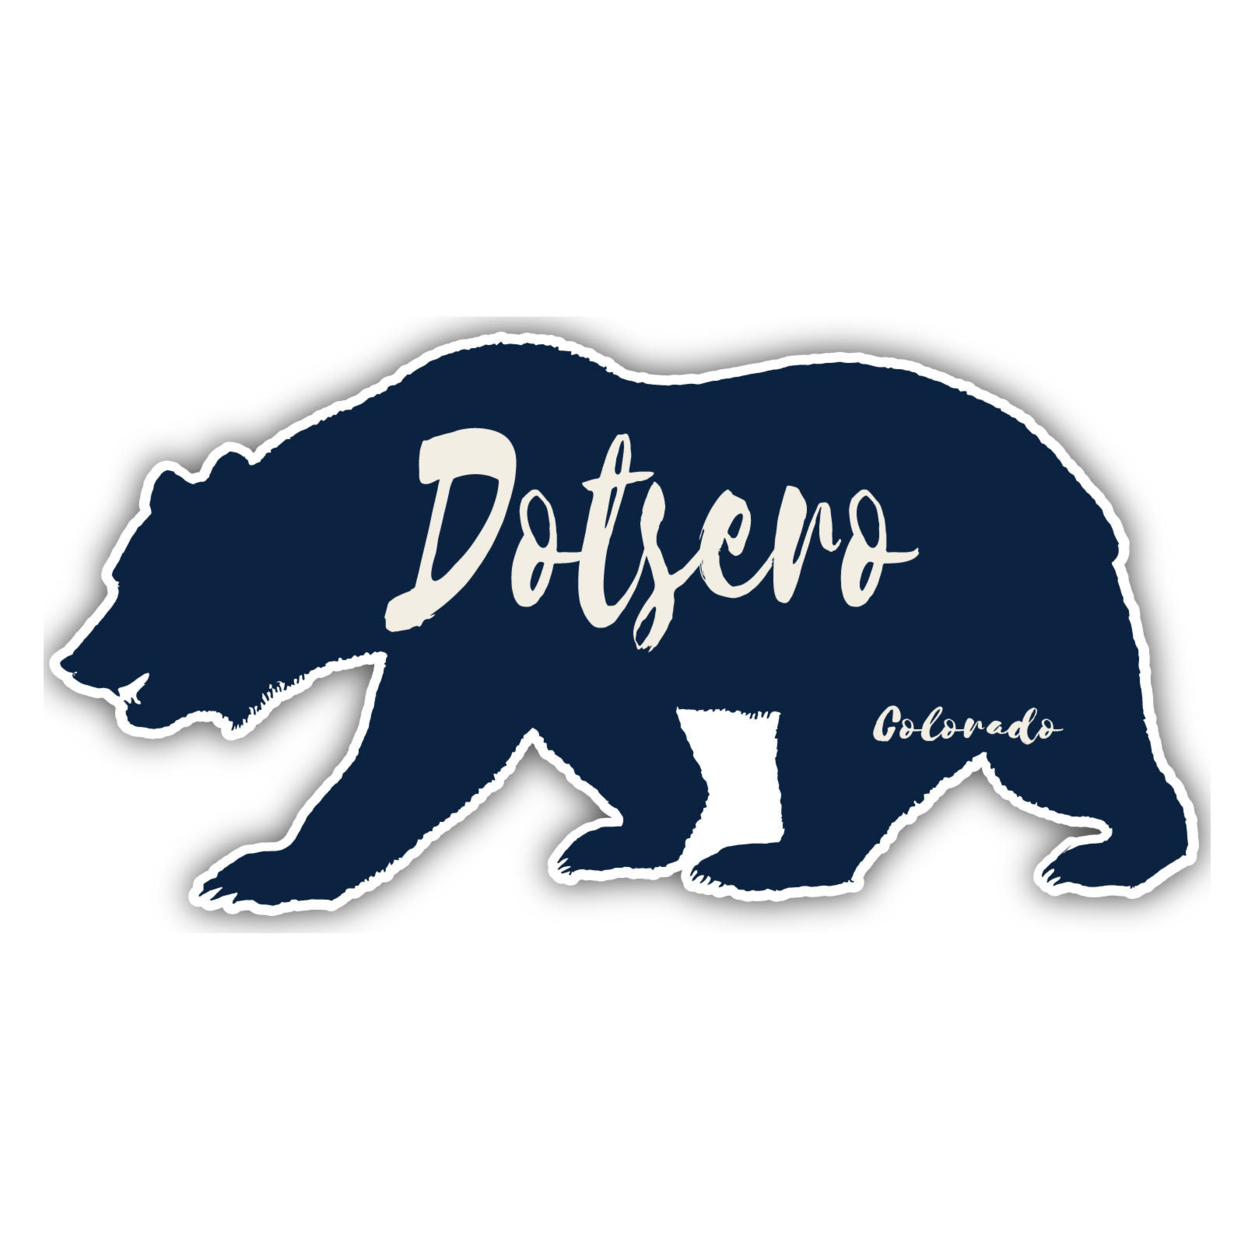 Dotsero Colorado Souvenir Decorative Stickers (Choose Theme And Size) - Single Unit, 6-Inch, Bear